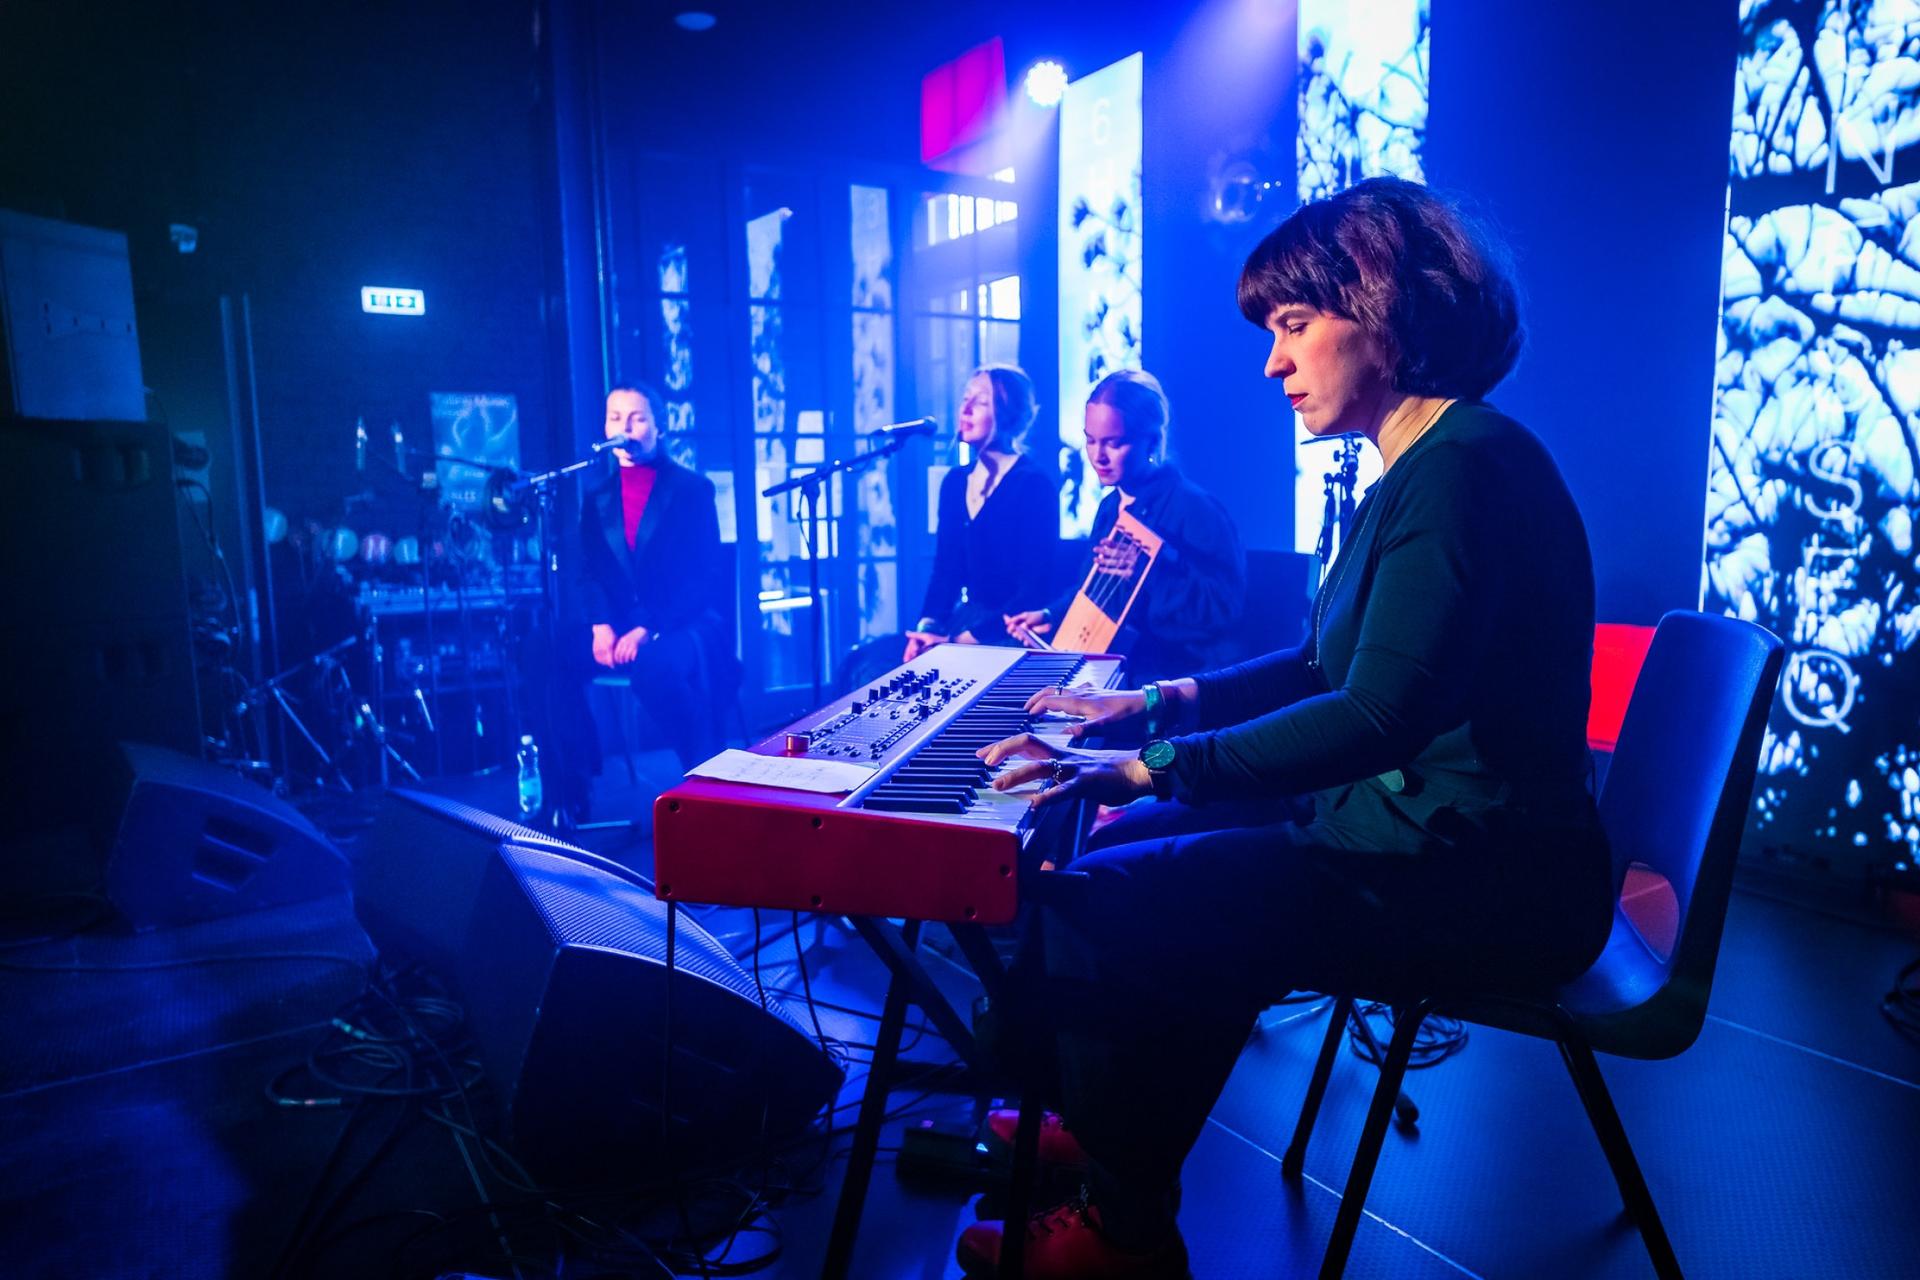 On the far right, Kaisa Kuslapuu plays the keyboard on the "Folktronica" stage during Tallinn Music Week.